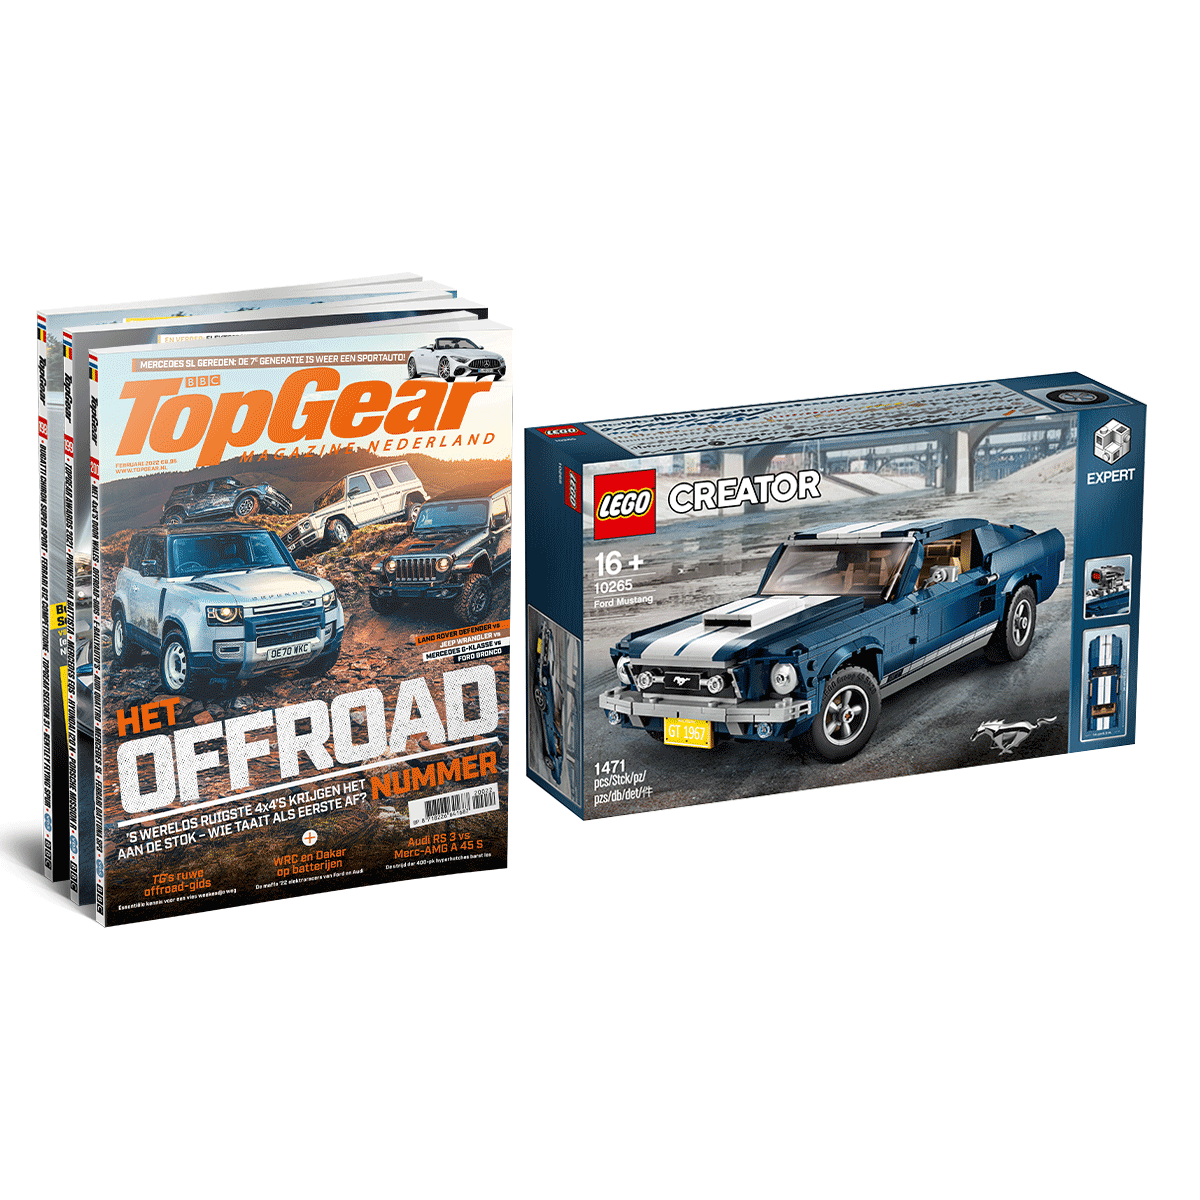 TopGear abonnement met LEGO Ford Mustang